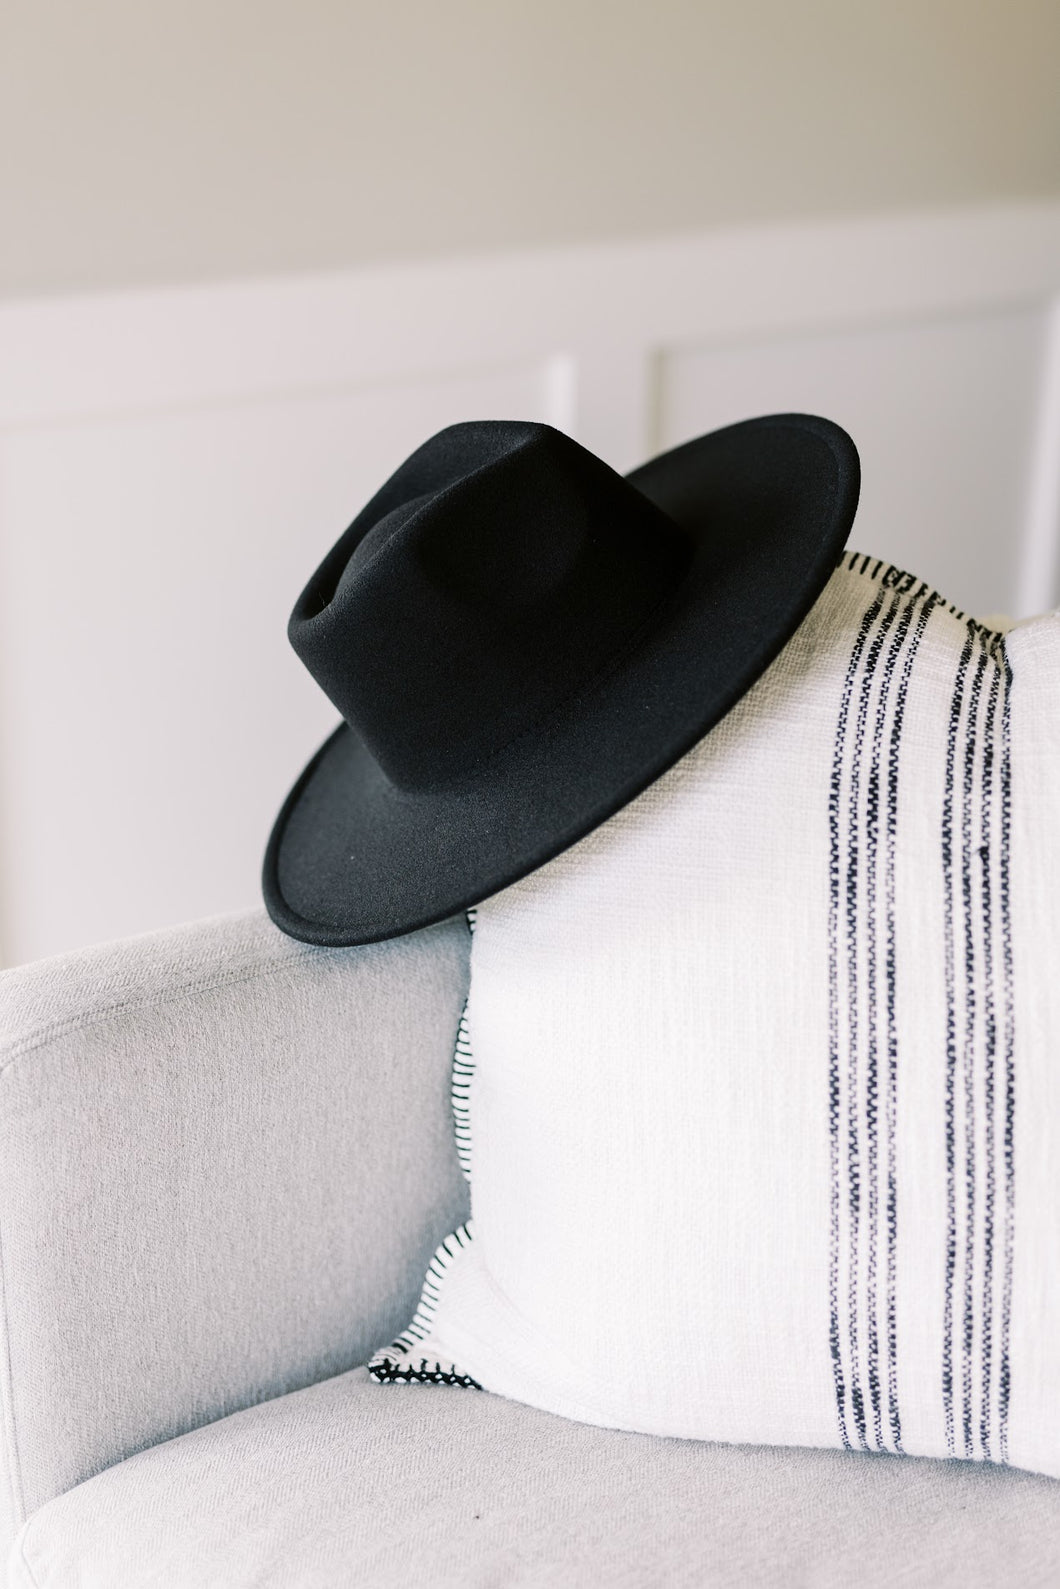 Black Rancher Hat